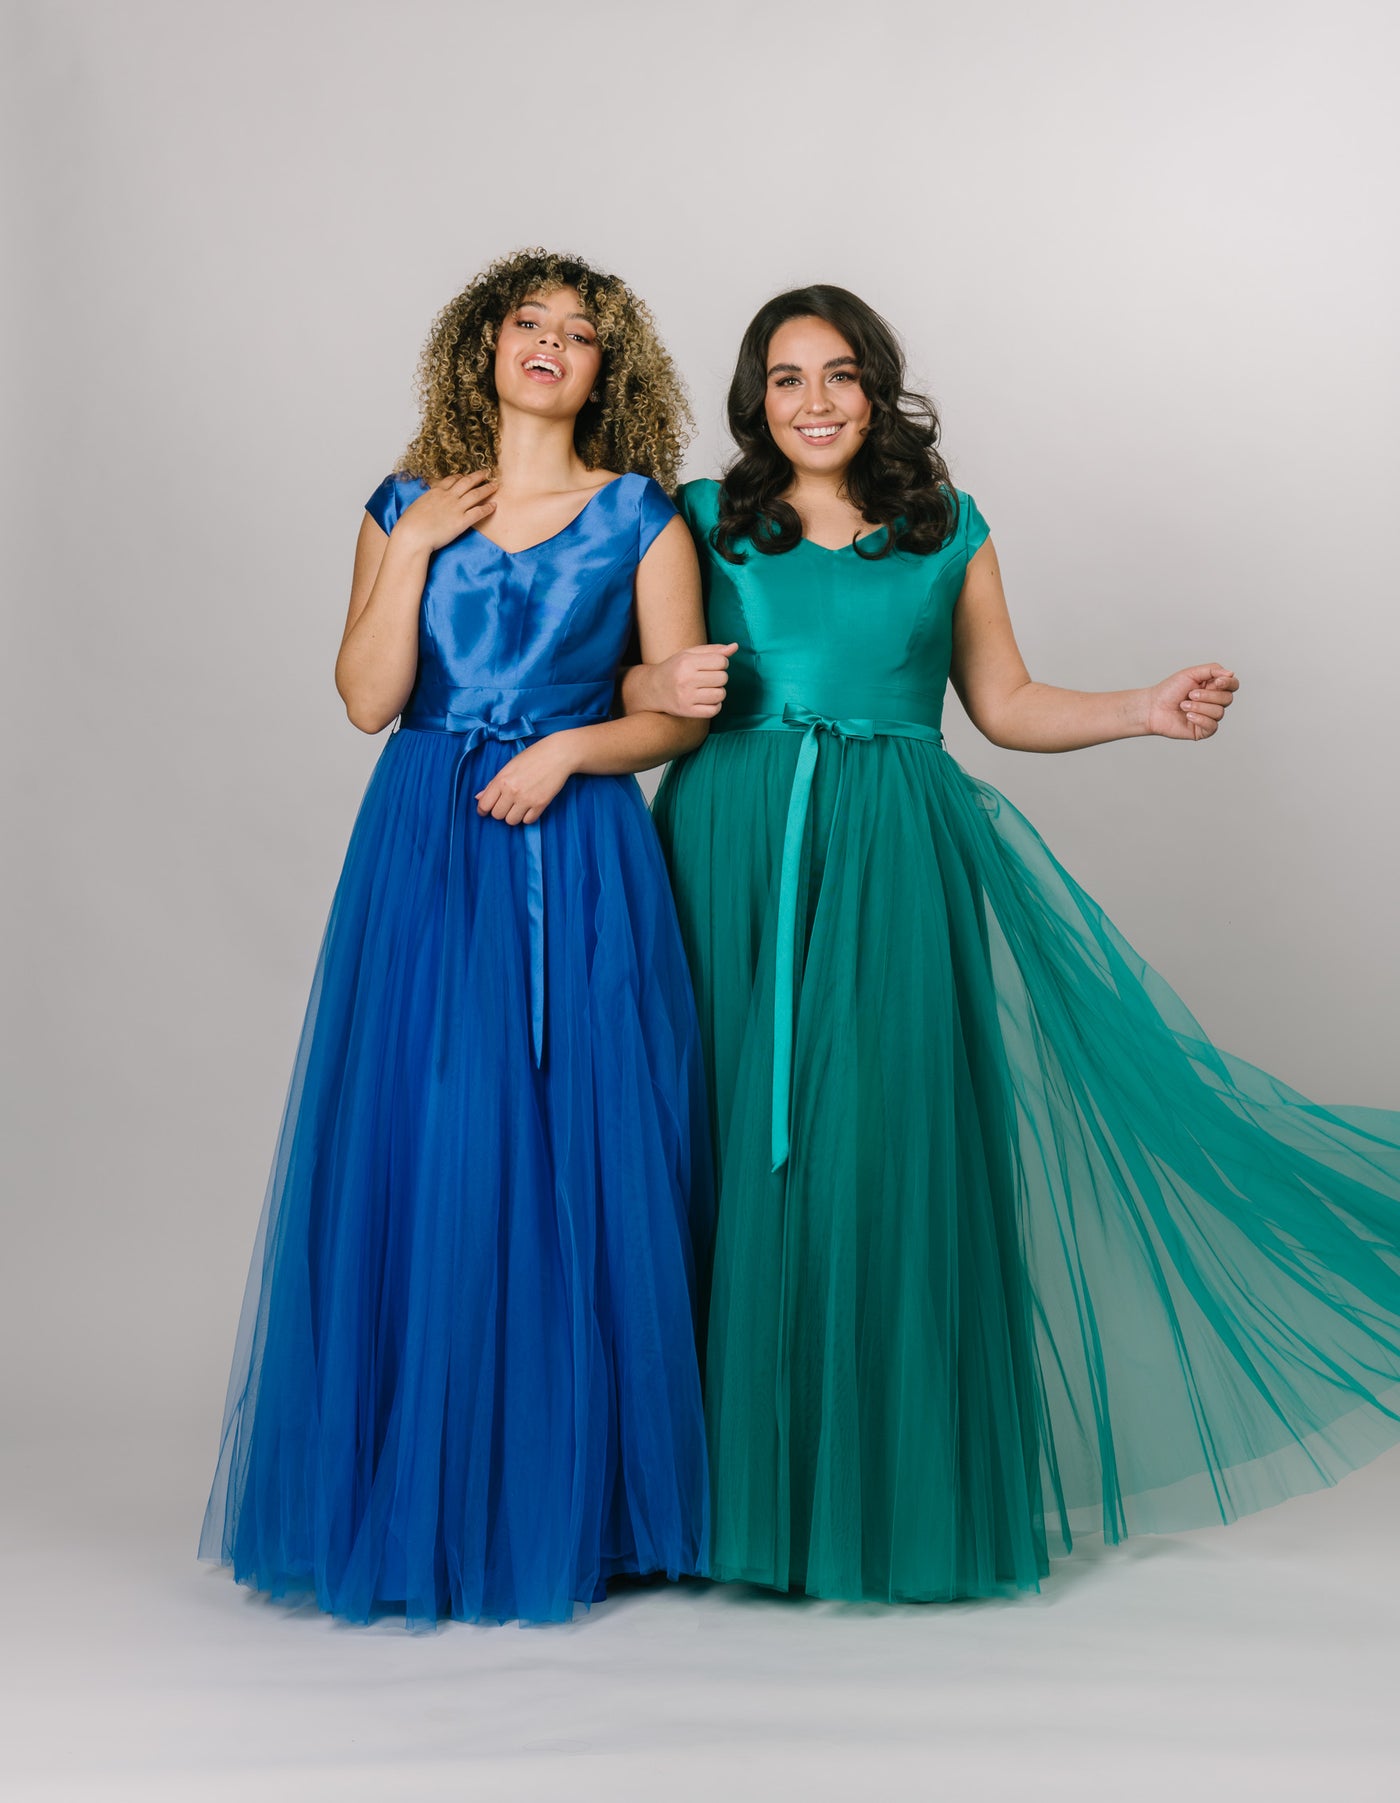 Modest Dresses - Modest Prom Dress - Formalwear Modest Dresses - Bridesmaid Modest Dresses.  Blue and green dresses side by side.